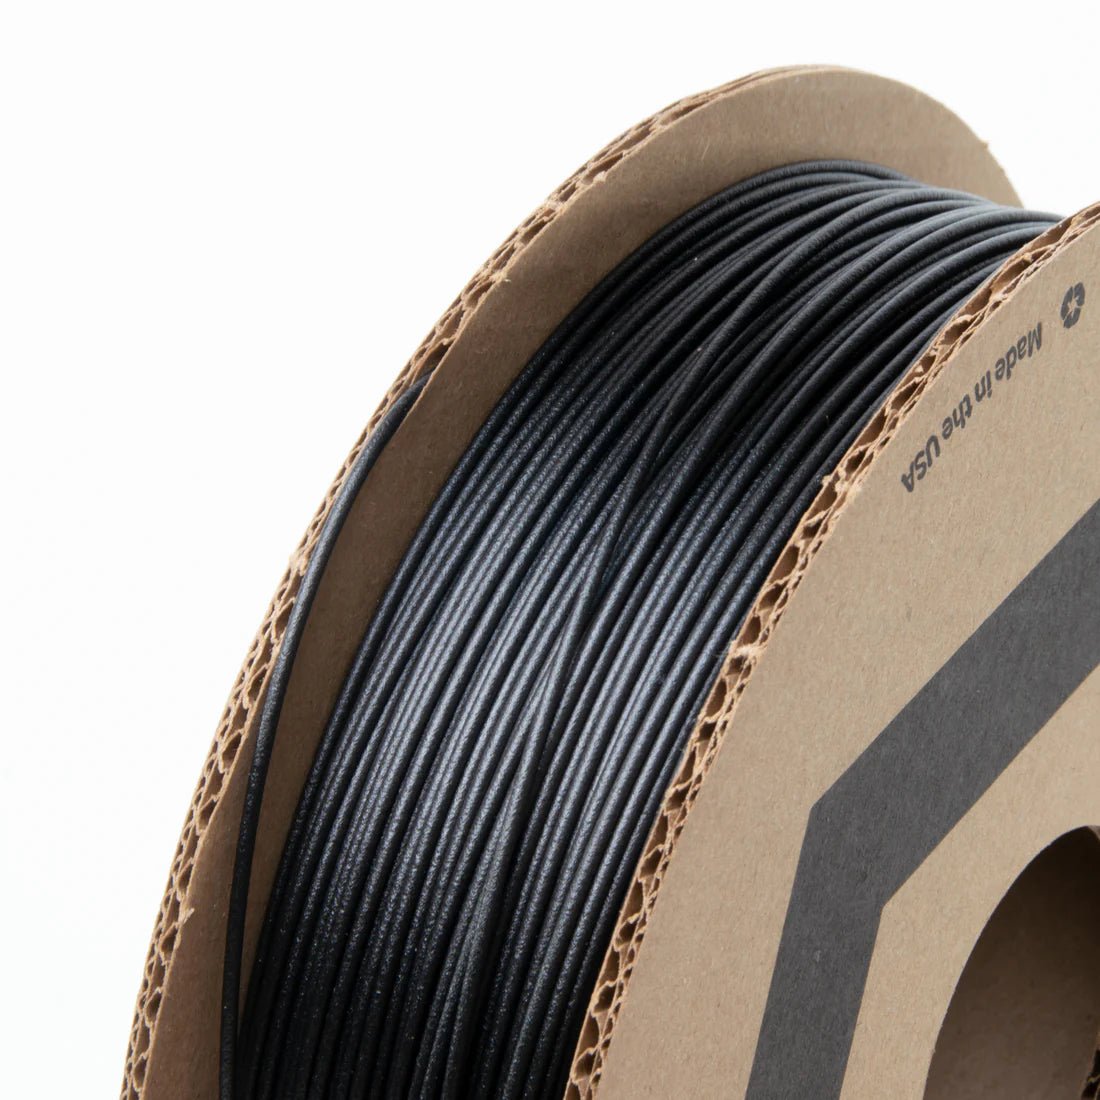 ProtoPasta Carbon Fiber PETG (75% recycled!) 500g - West3D Printing - ProtoPasta